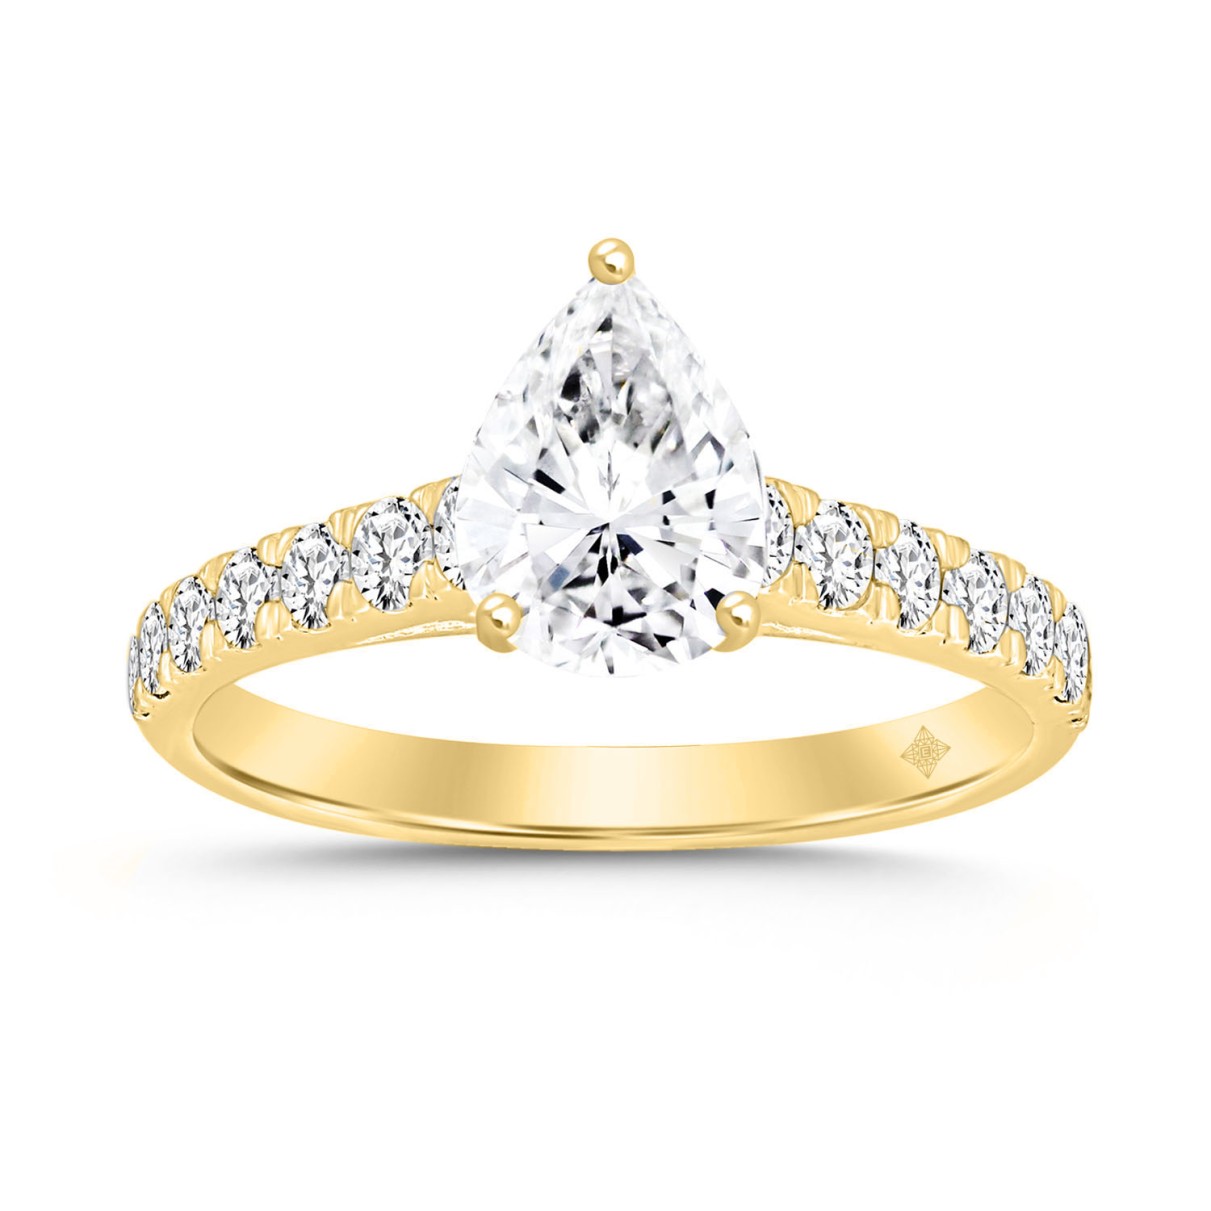 LADIES RING 1 1/2CT ROUND/PEAR DIAMOND 14K YELLOW GOLD (CENTER STONE PEAR DIAMOND 1CT)